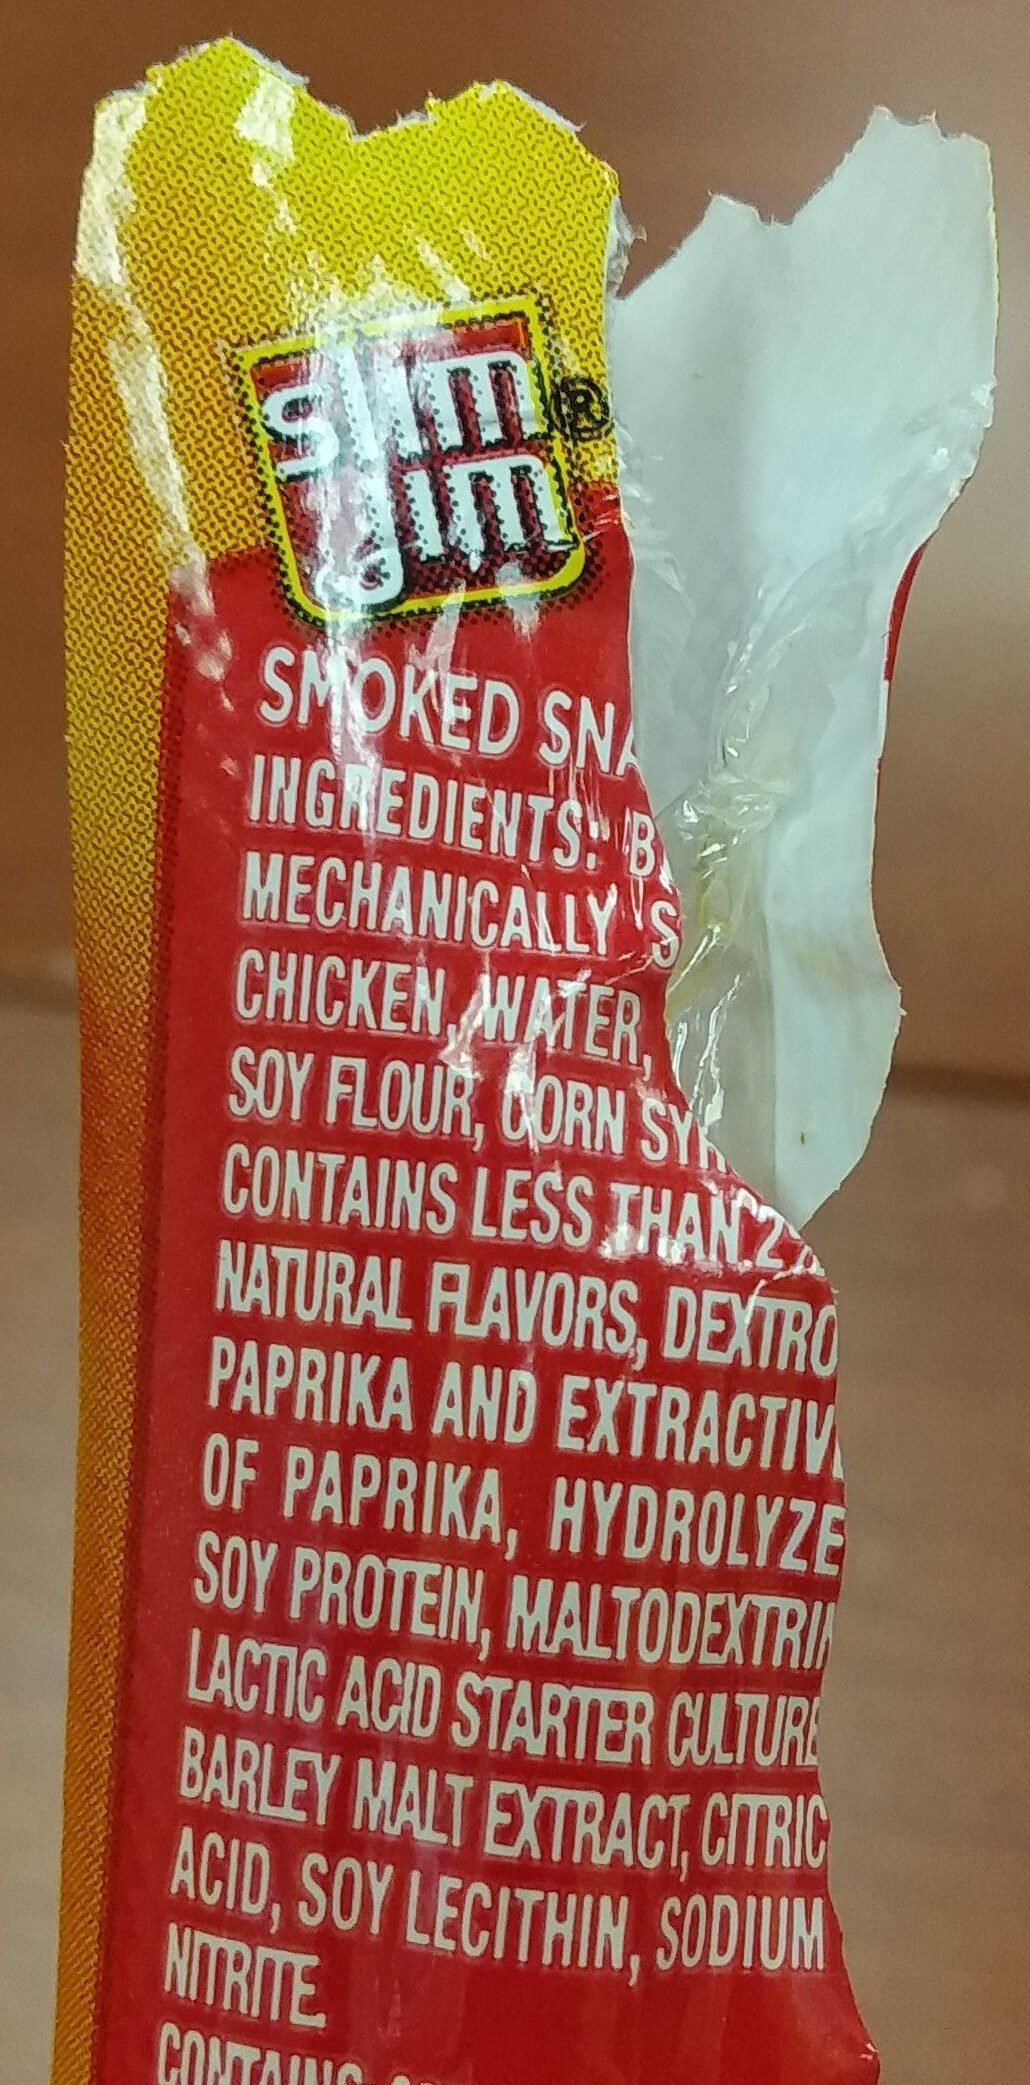 Smoked snack stick - Ingredients - en